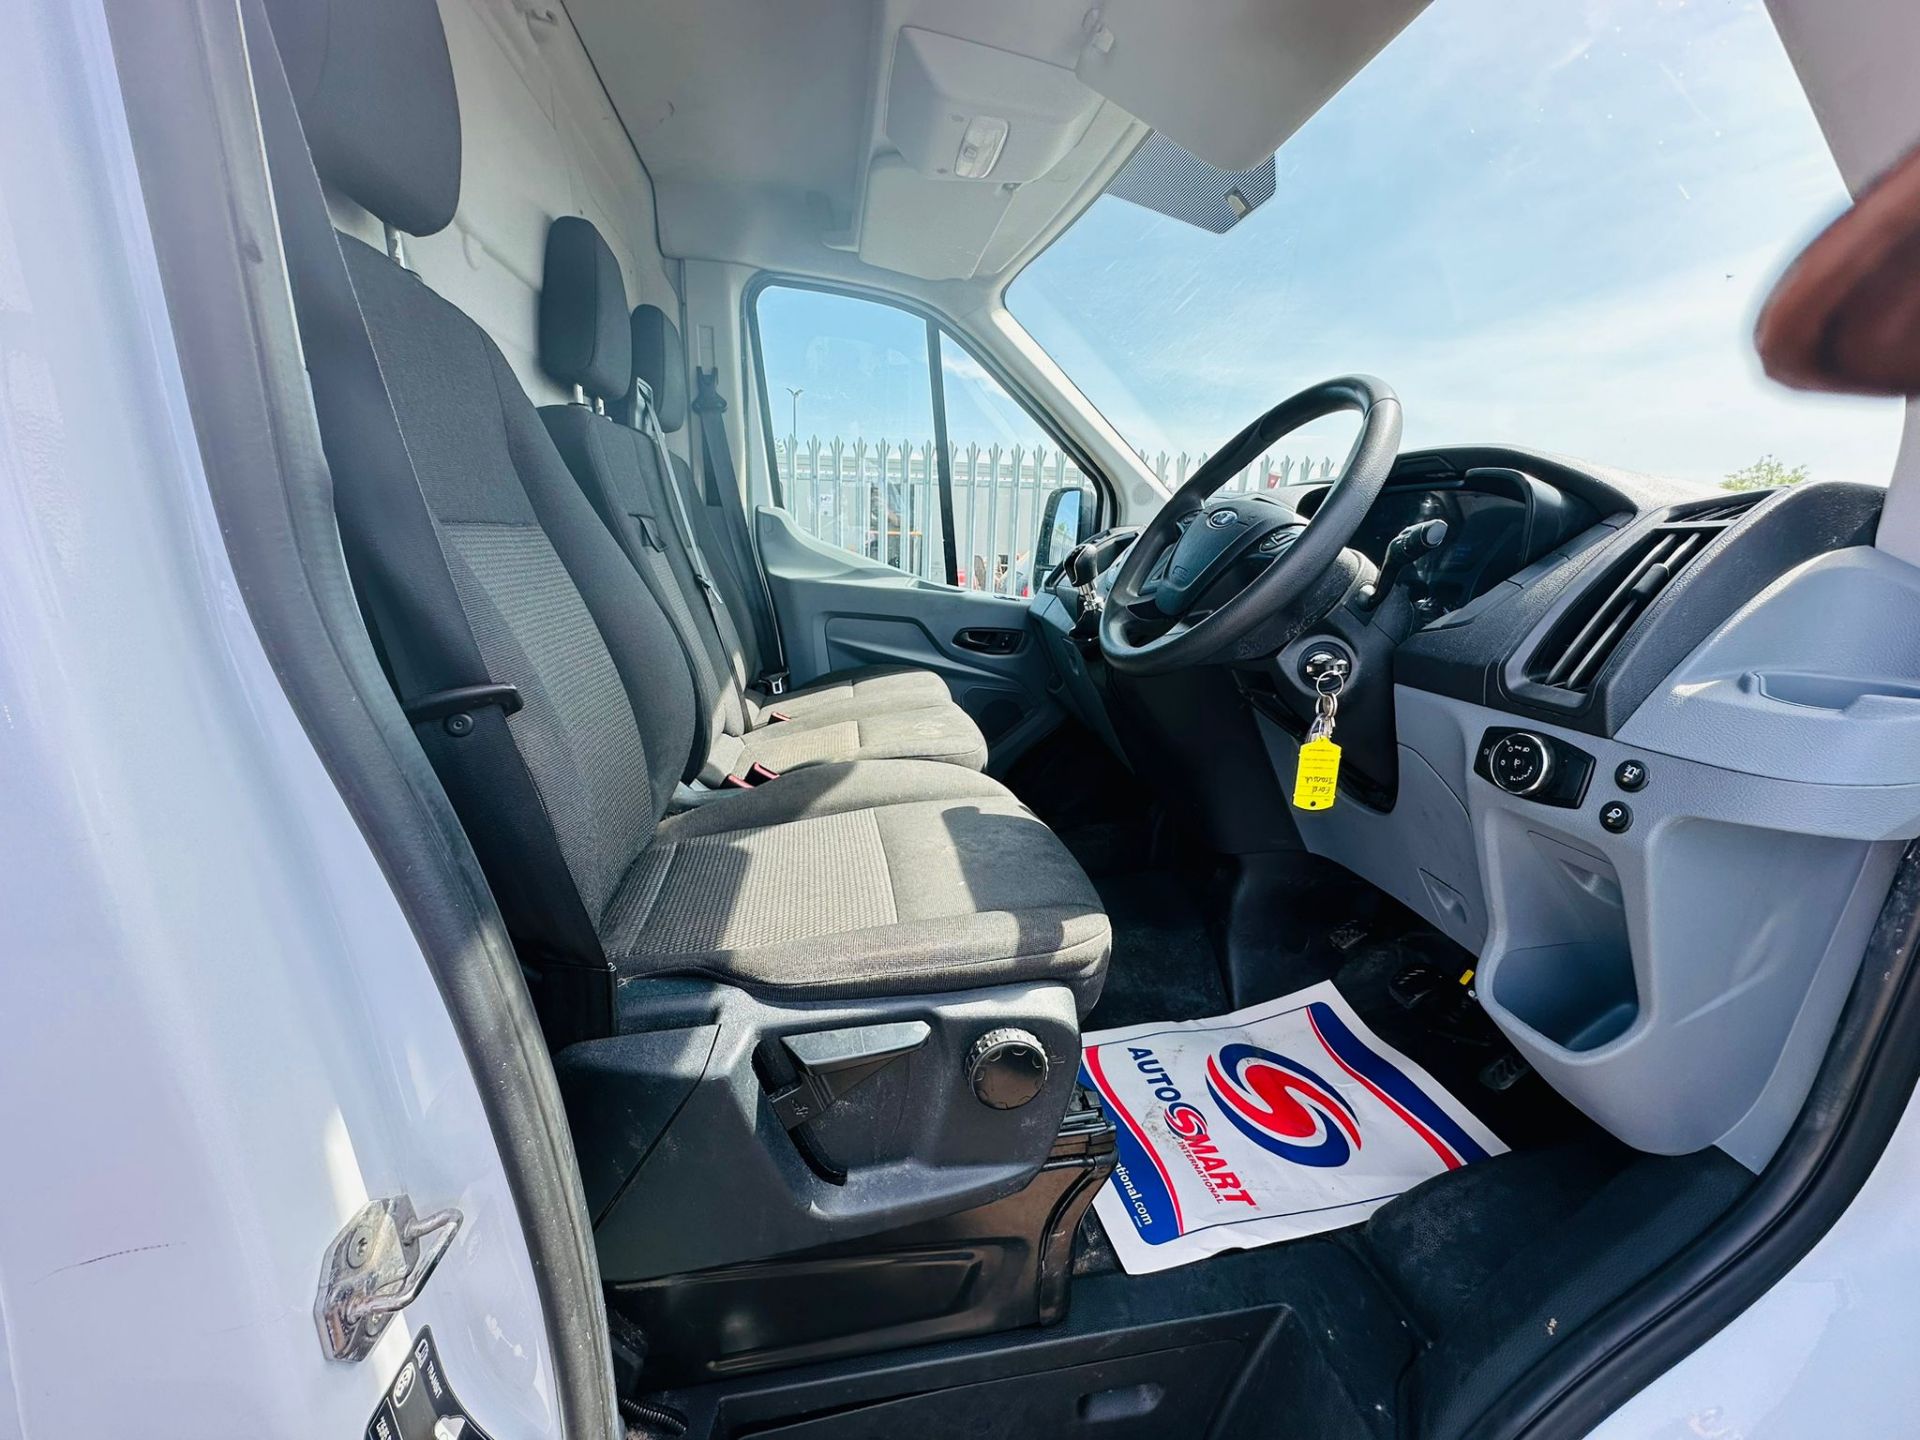 Ford Transit 2.0 TDCI 130 L3 H3 2019 '19 Reg' Panel Van - ULEZ Compliant - Plylined - Bluetooth - Image 12 of 16